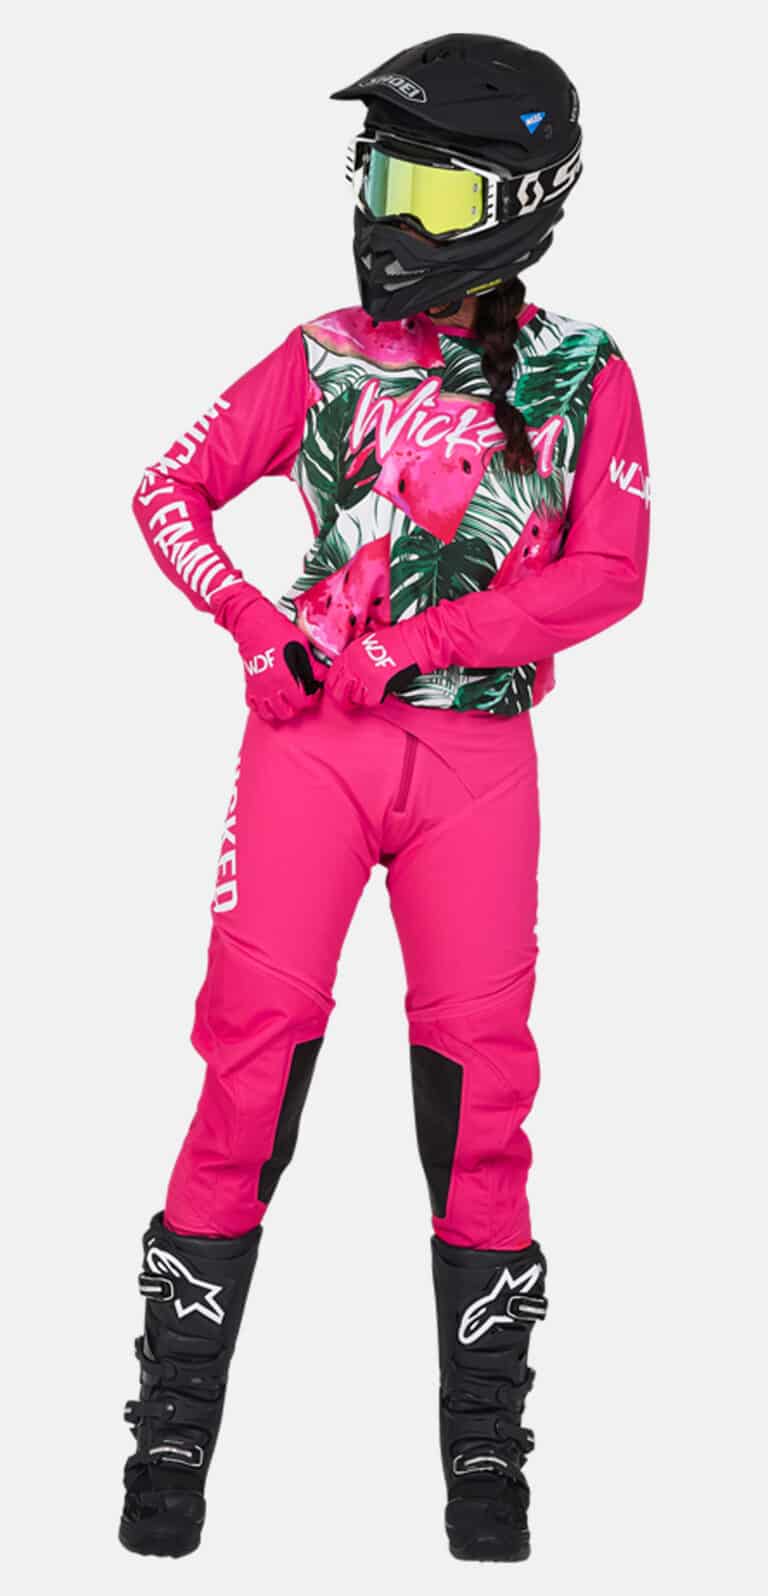 Melon MX gear pink on woman